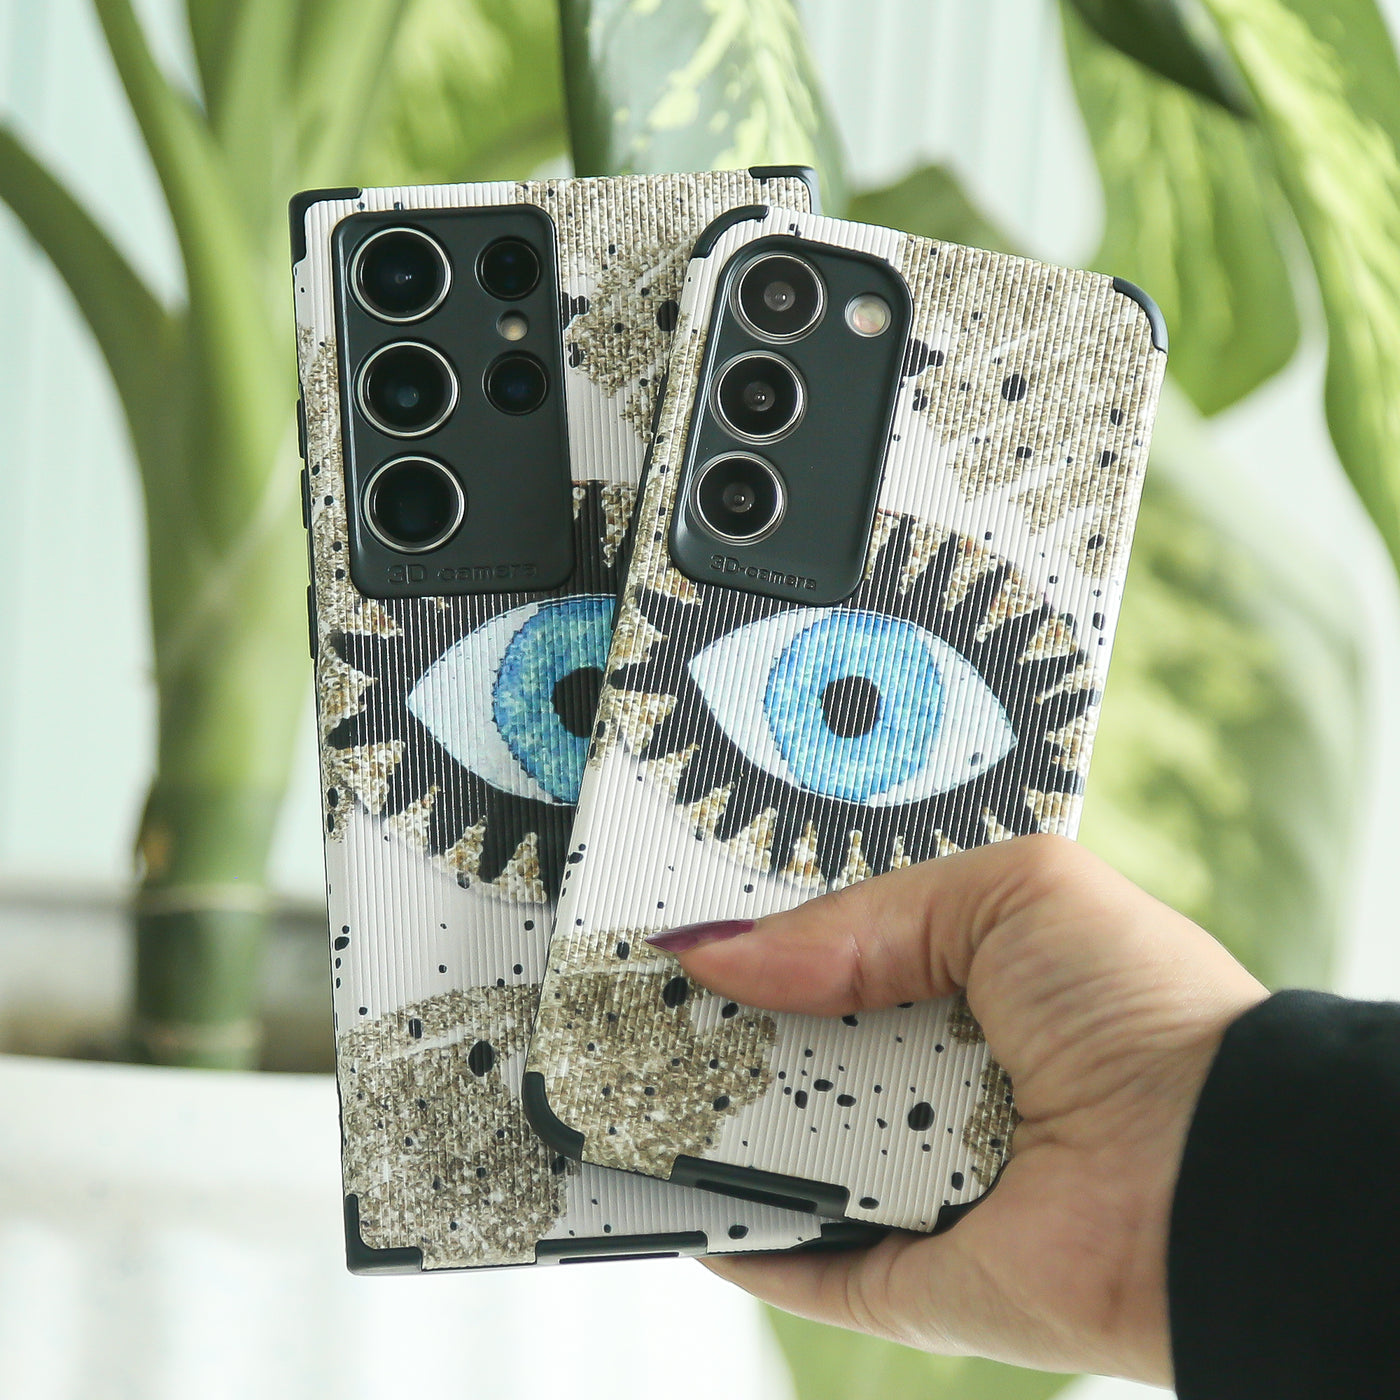 Evil Eye Printed Phone Case - Samsung